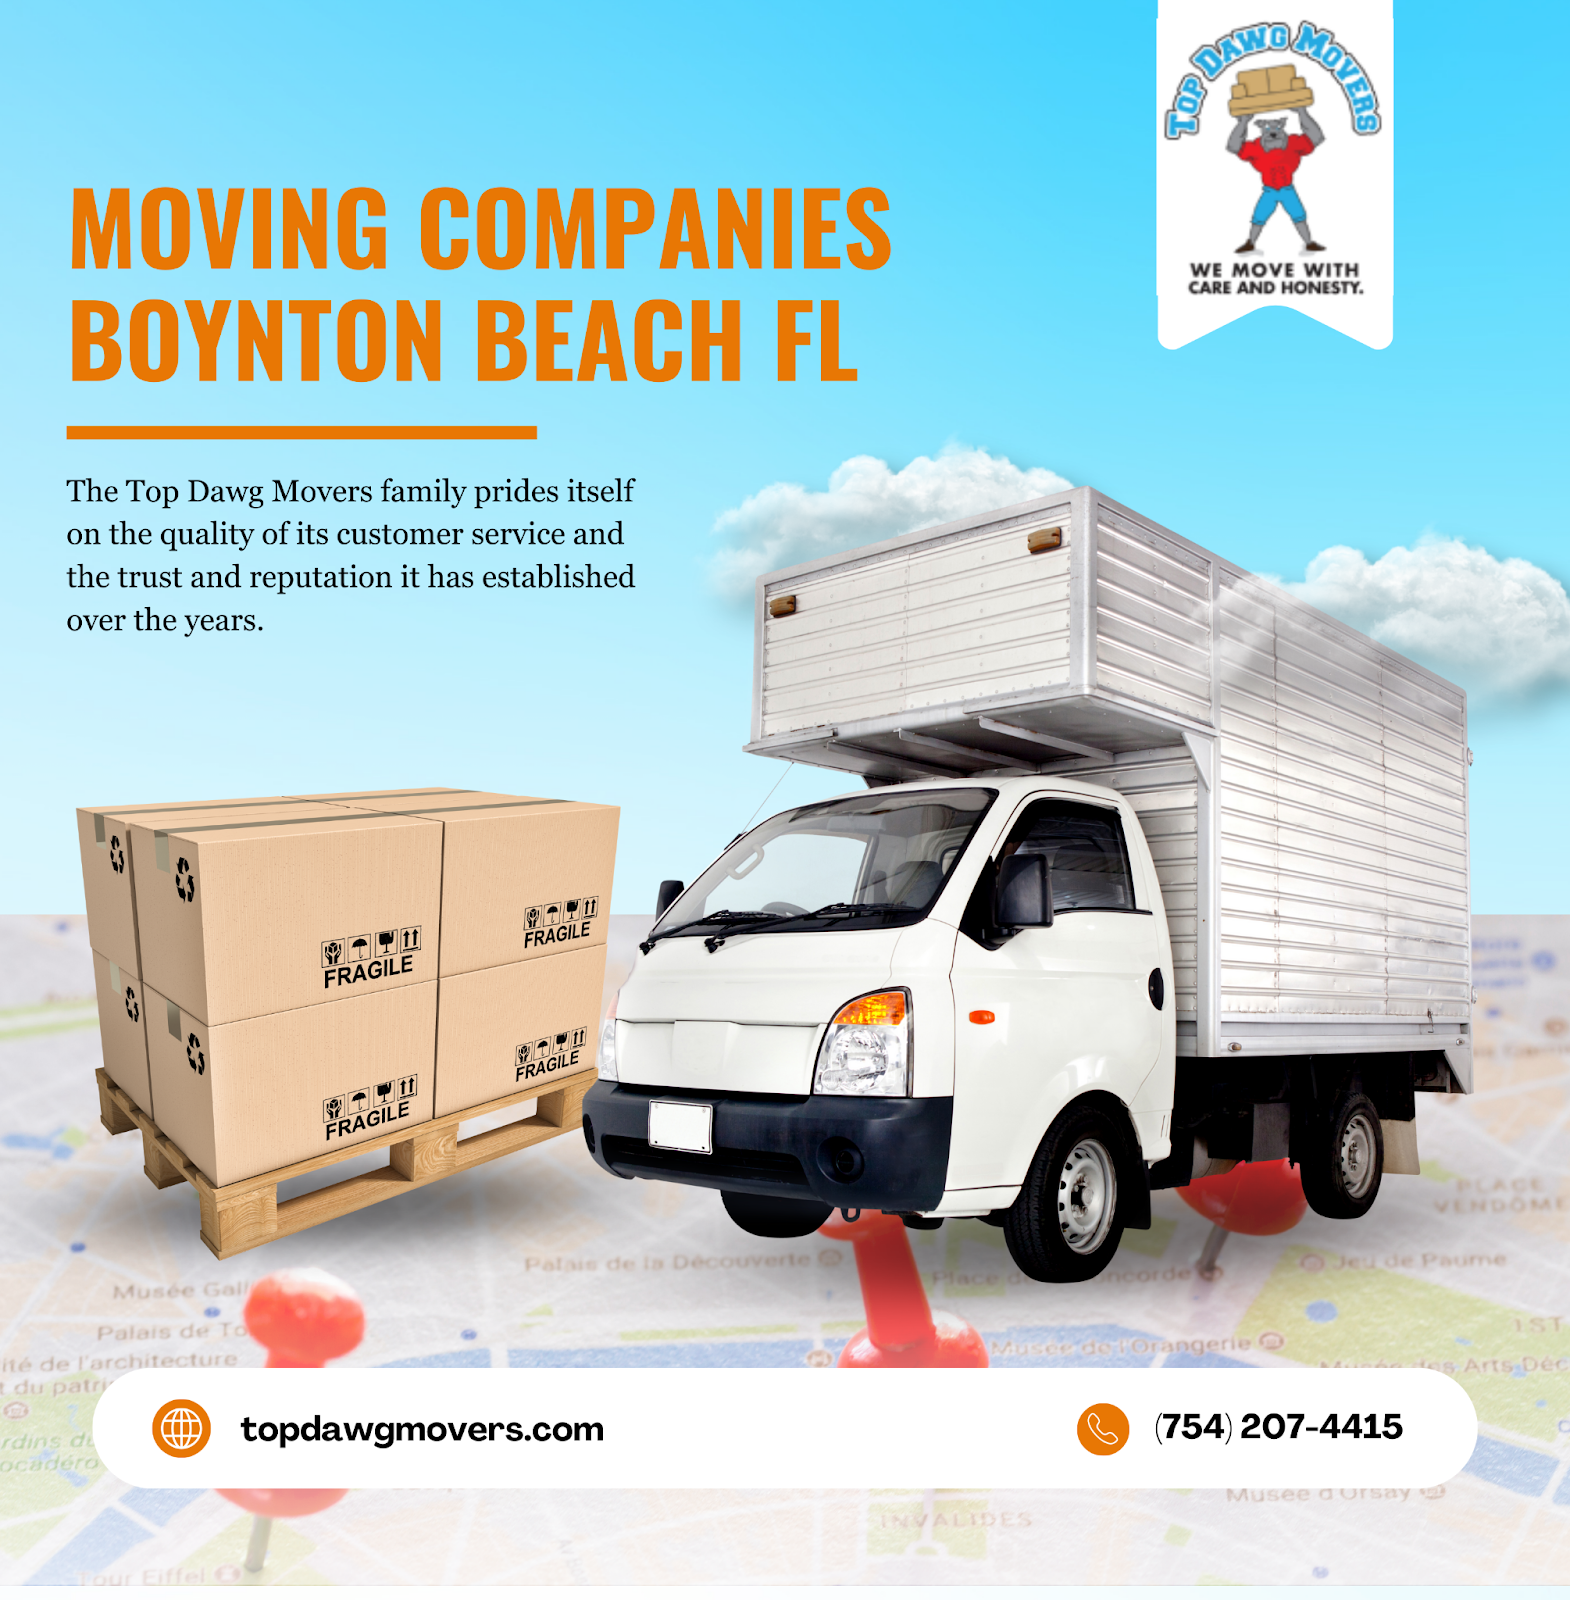 Moving Companies in Boynton Beach, FL